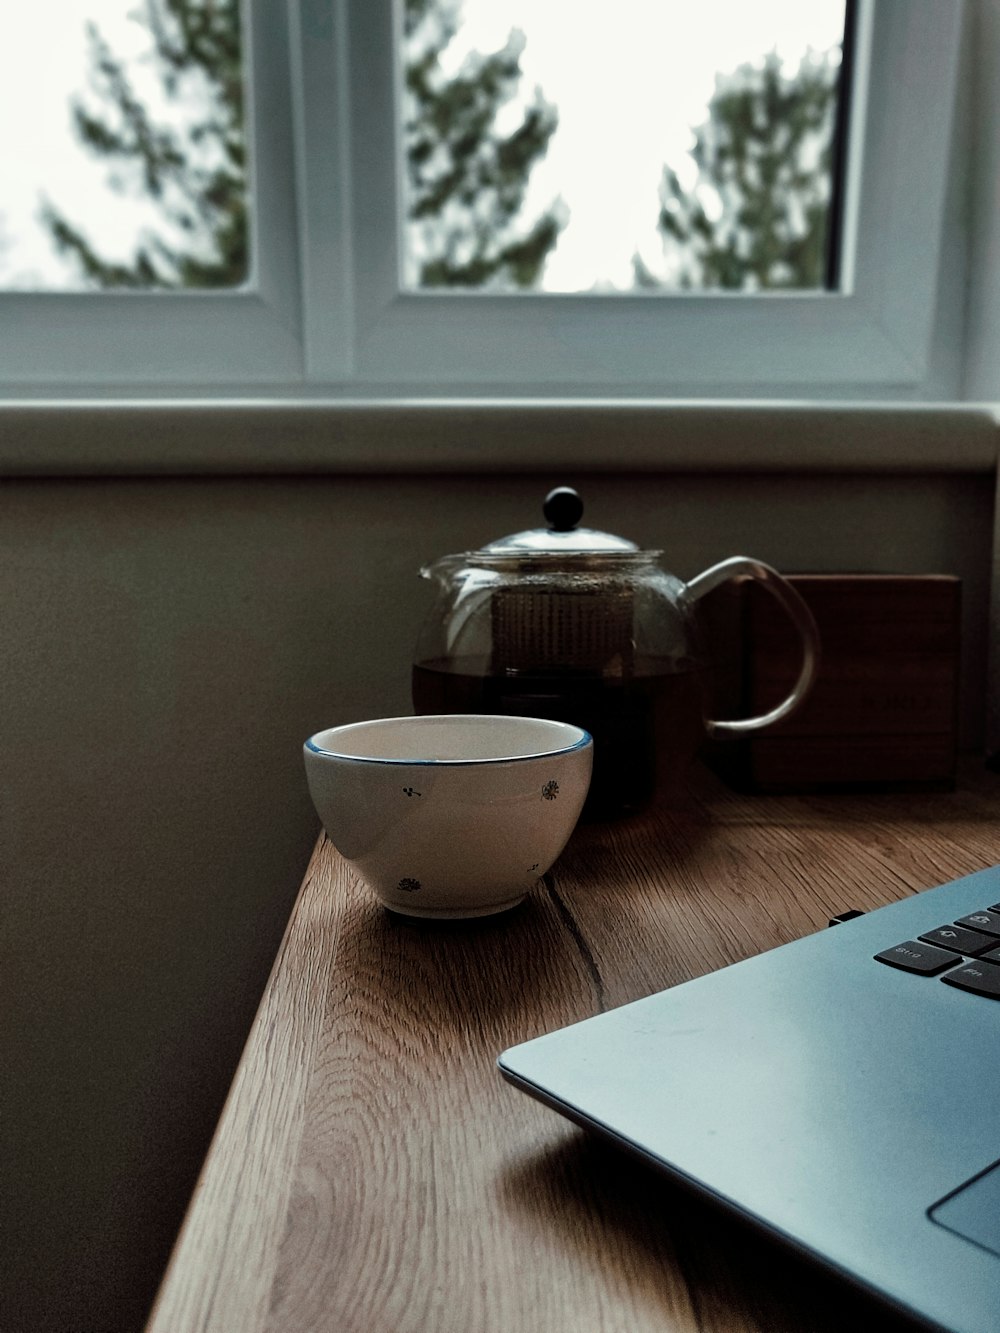 clear-glass coffee pitcher beside white ceramic mug